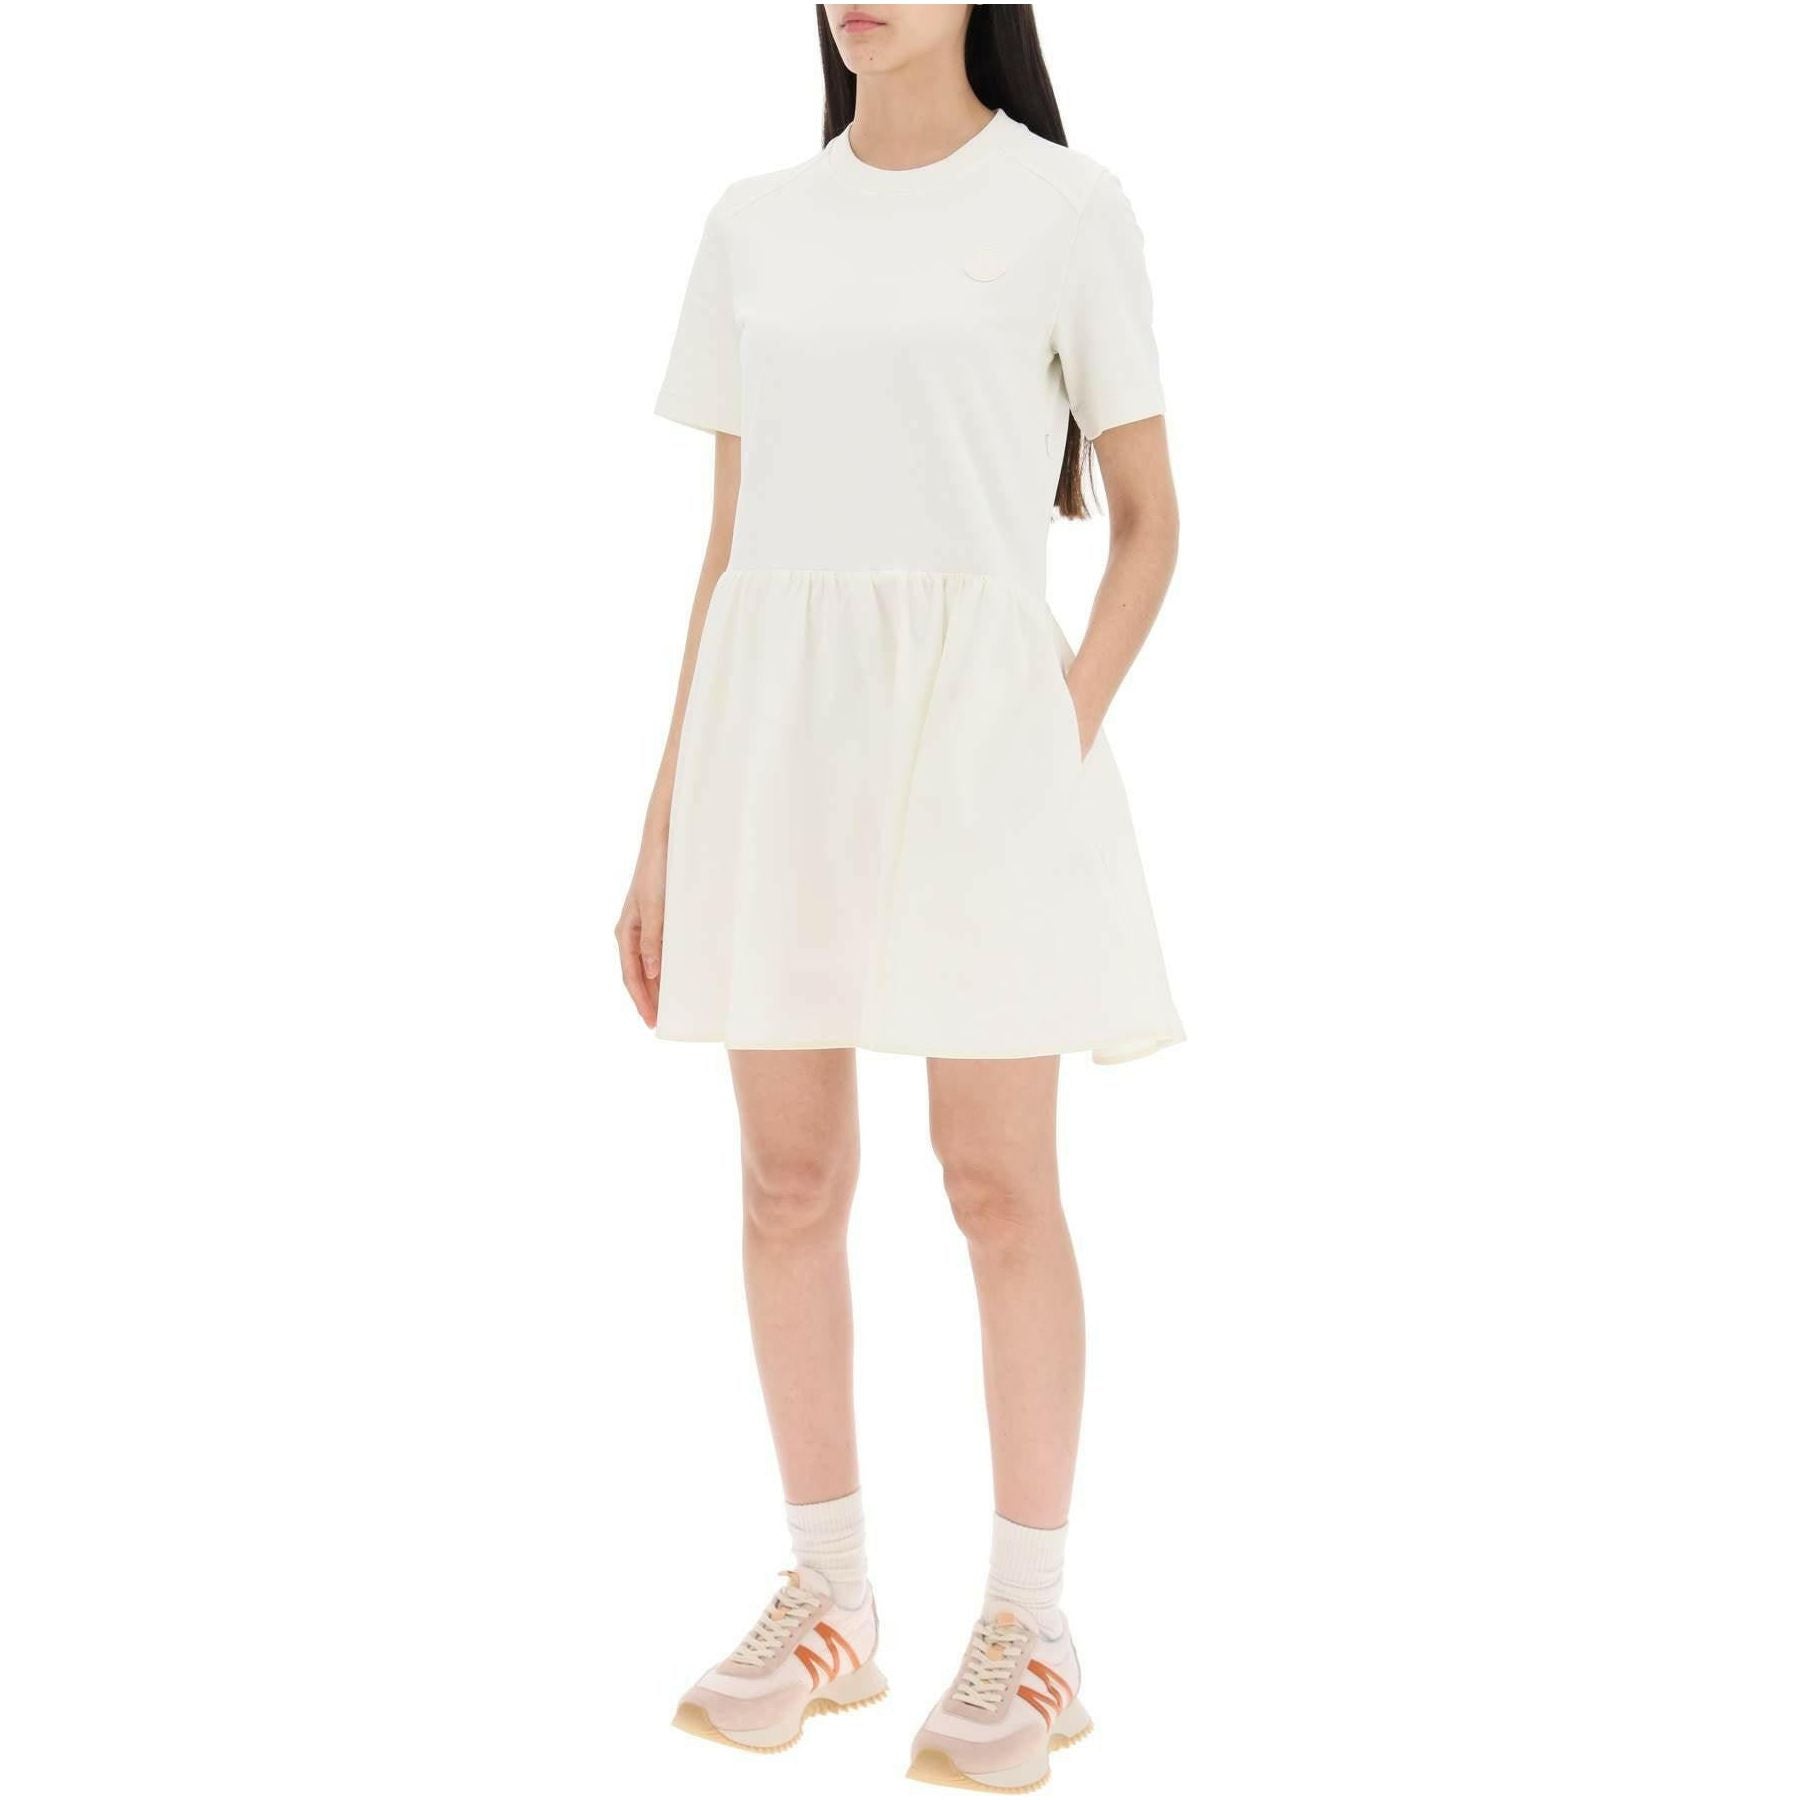 White Fit and Flare Mini Dress with Taffeta Details MONCLER JOHN JULIA.